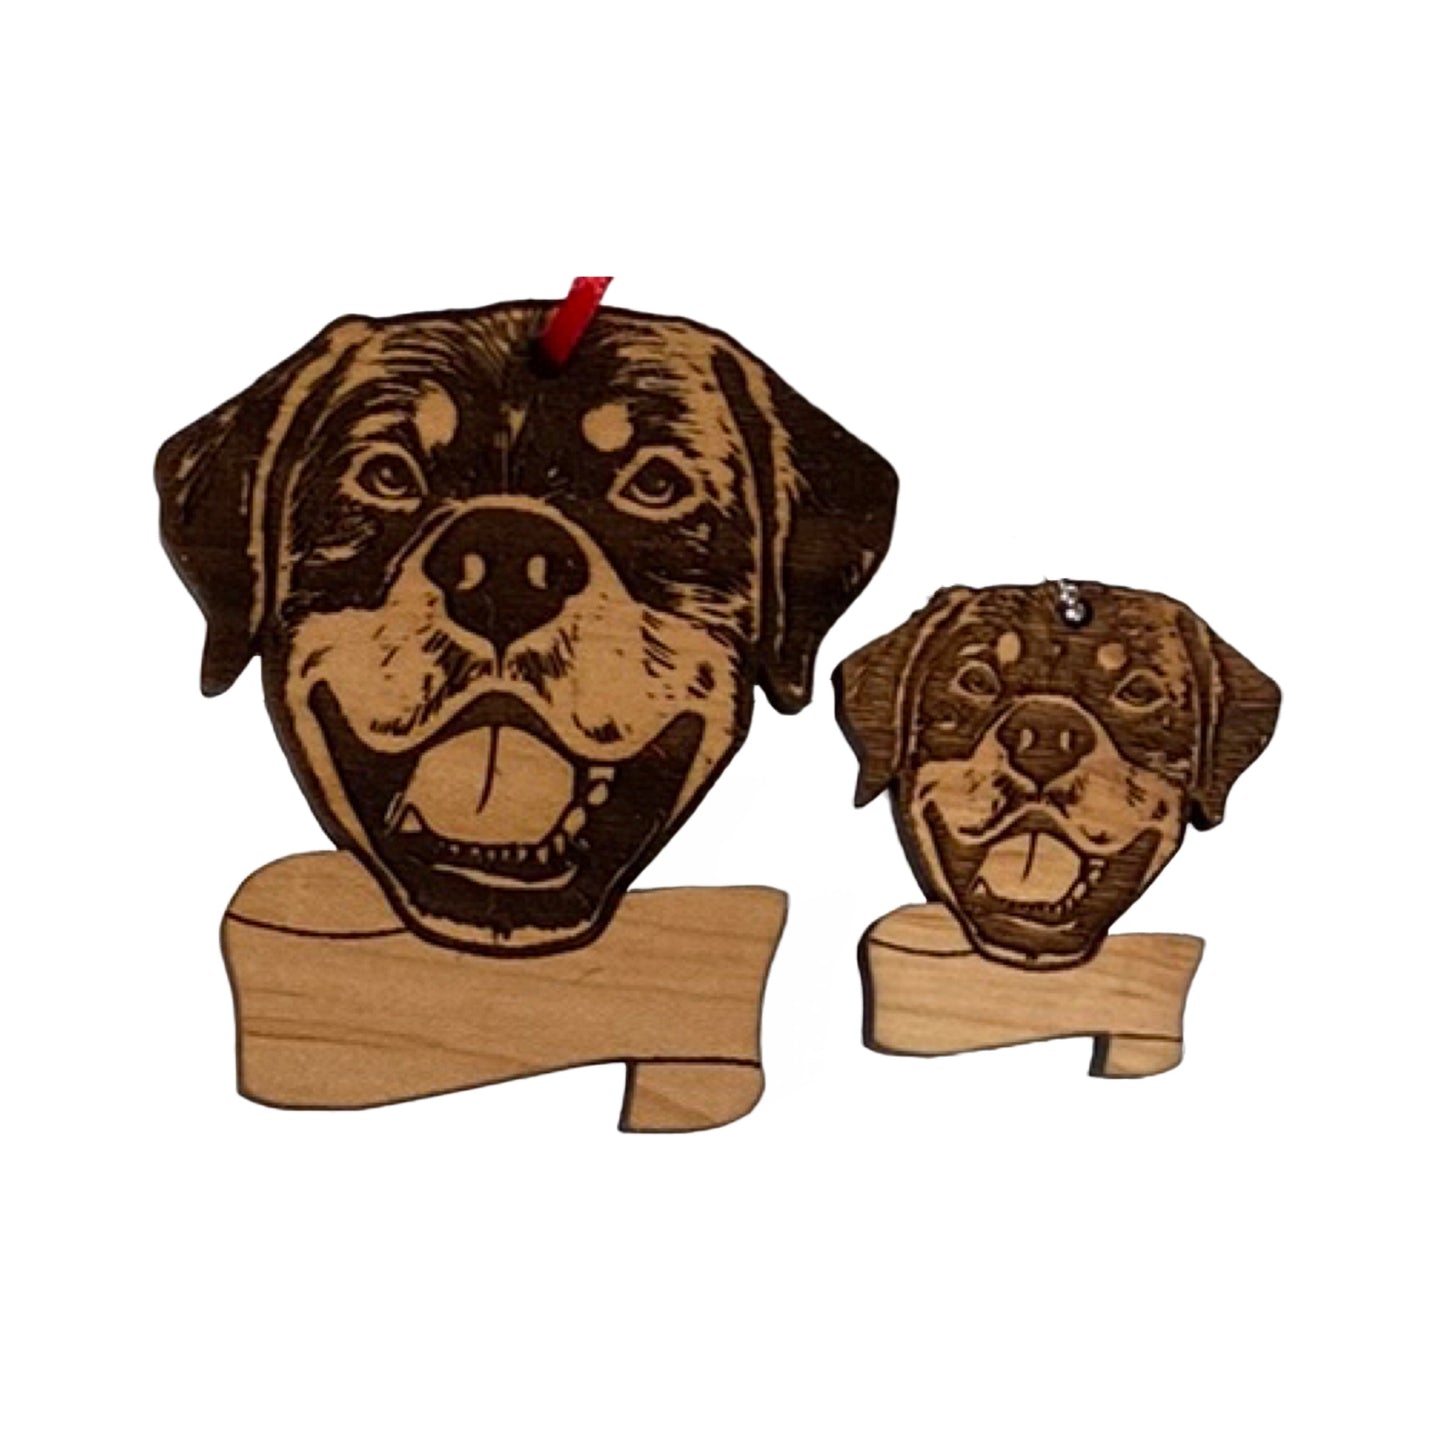 Personalized Name Dog Breed Keychain, Magnet, Ornament | Beagle, Poodle, Doodle, Frenchie, Rottweiler, Yorkie, Boston, Pug, Dalmatian, Great Dane